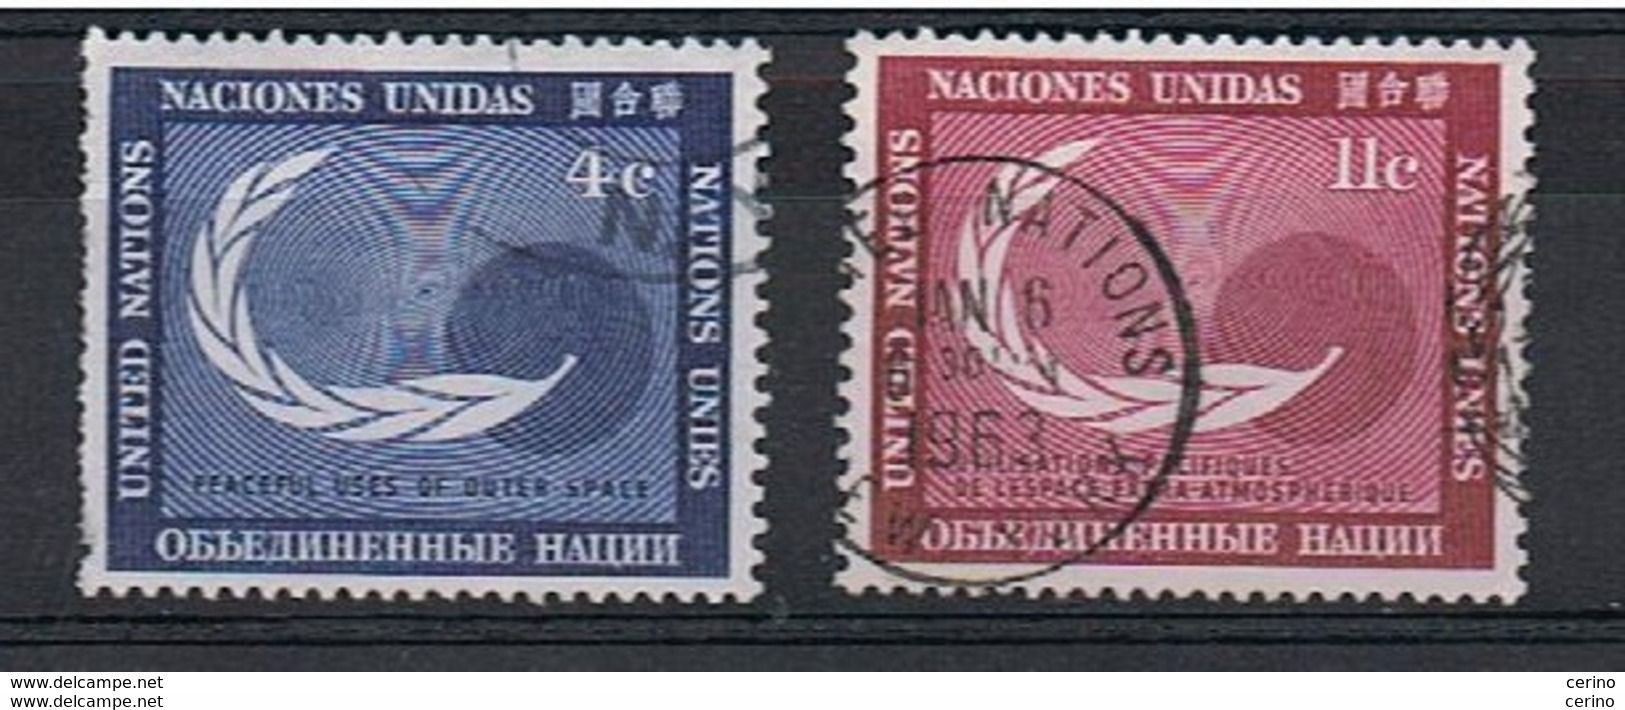 O.N.U.:  1962  SPACE  -  KOMPLET  SET  2  USED  STAMPS  -  YV/TELL. 108/09 - Used Stamps